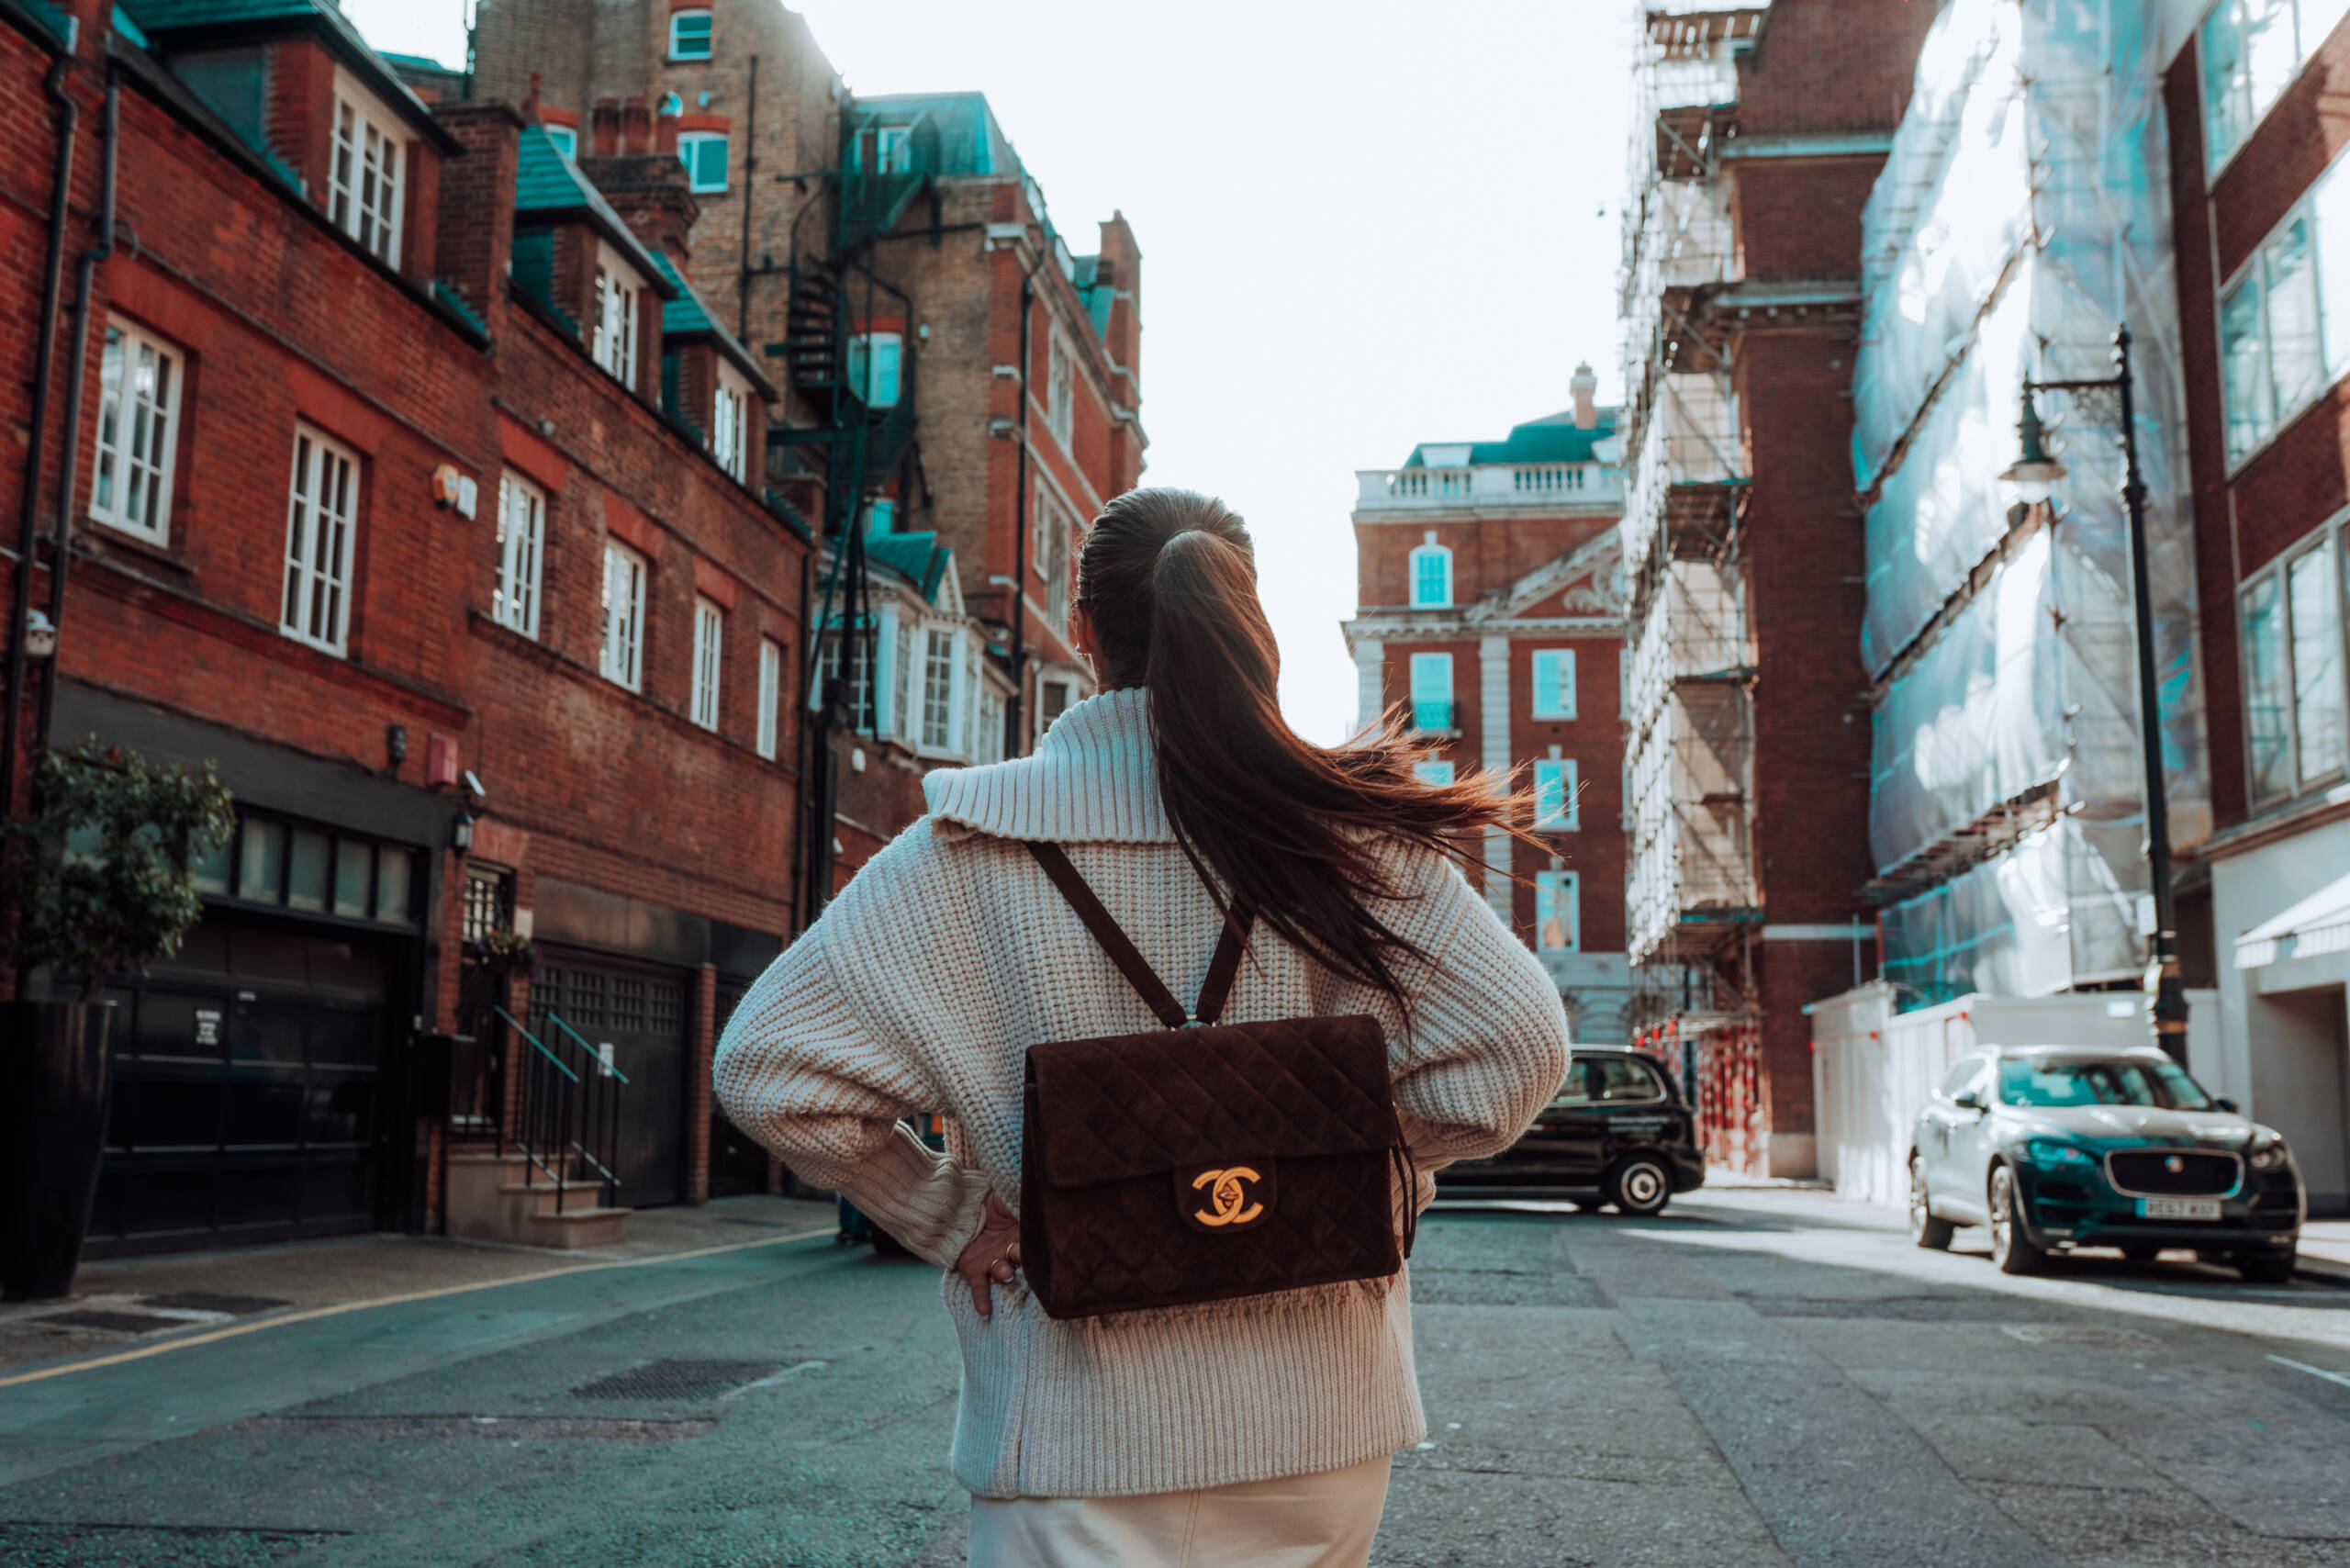 Chanel Boy Bag Insights, Hints & Tips